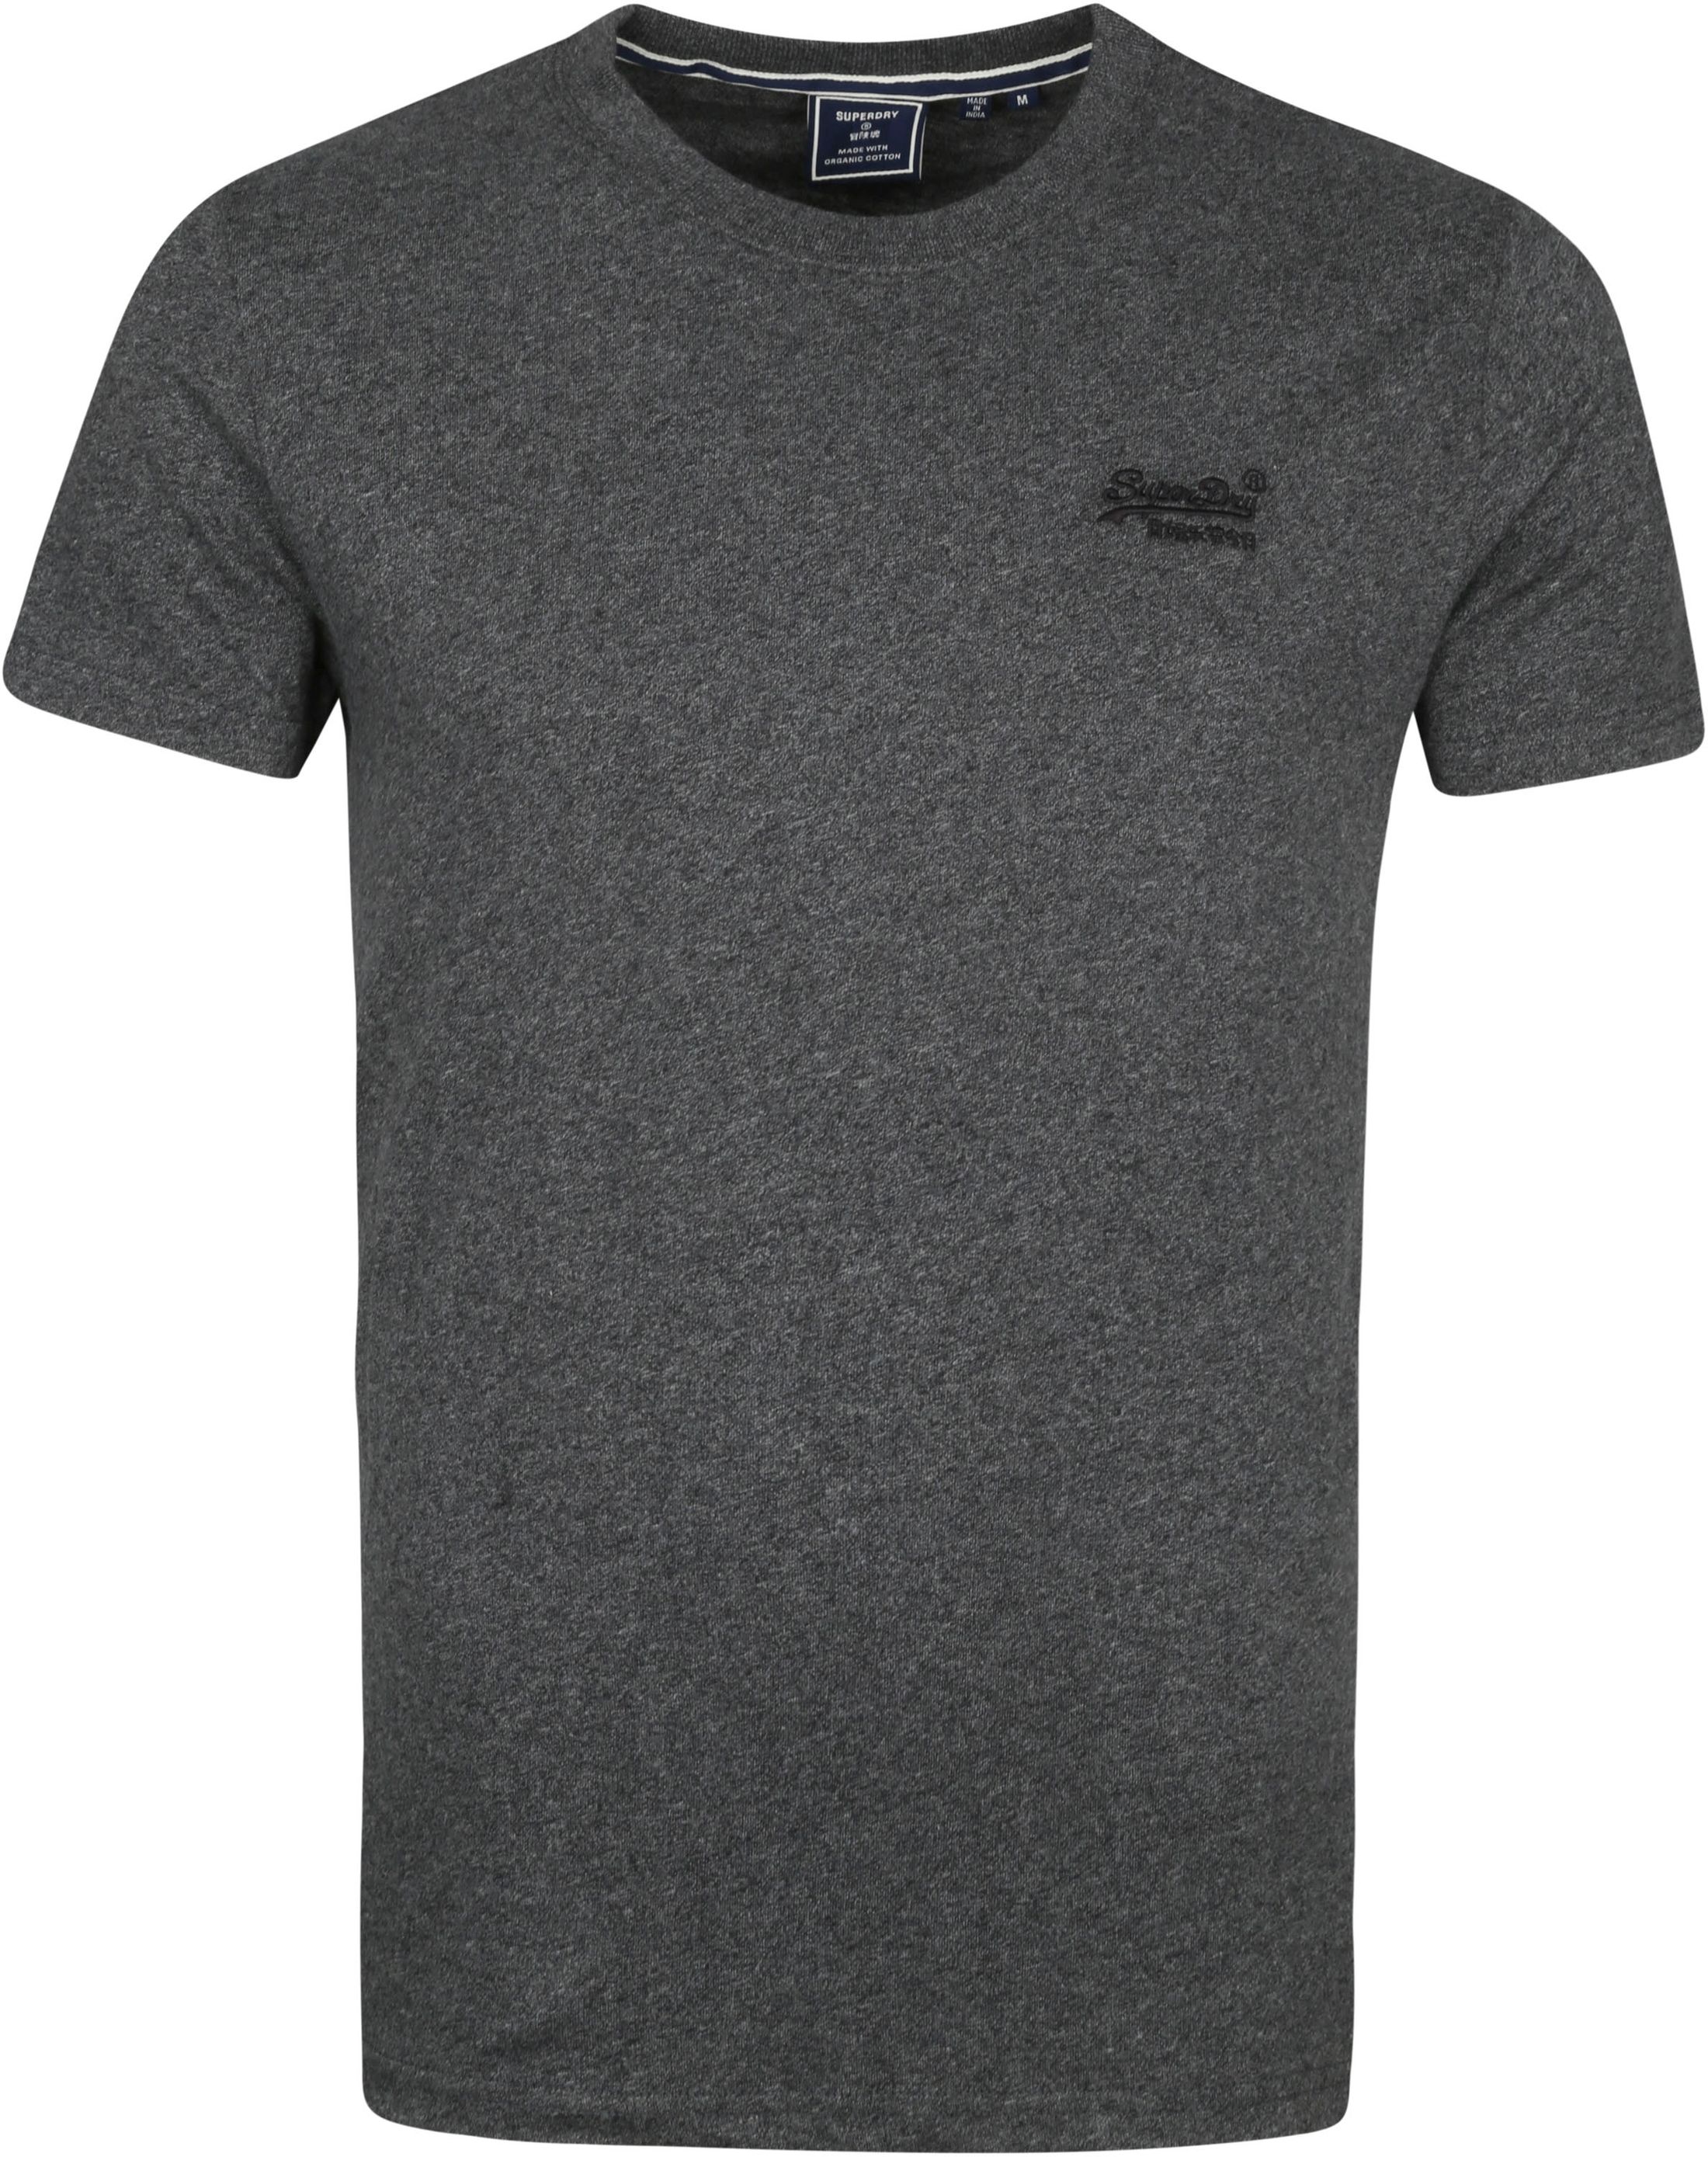 Superdry Classic T Shirt Dark Gray Dark Grey Grey size 3XL